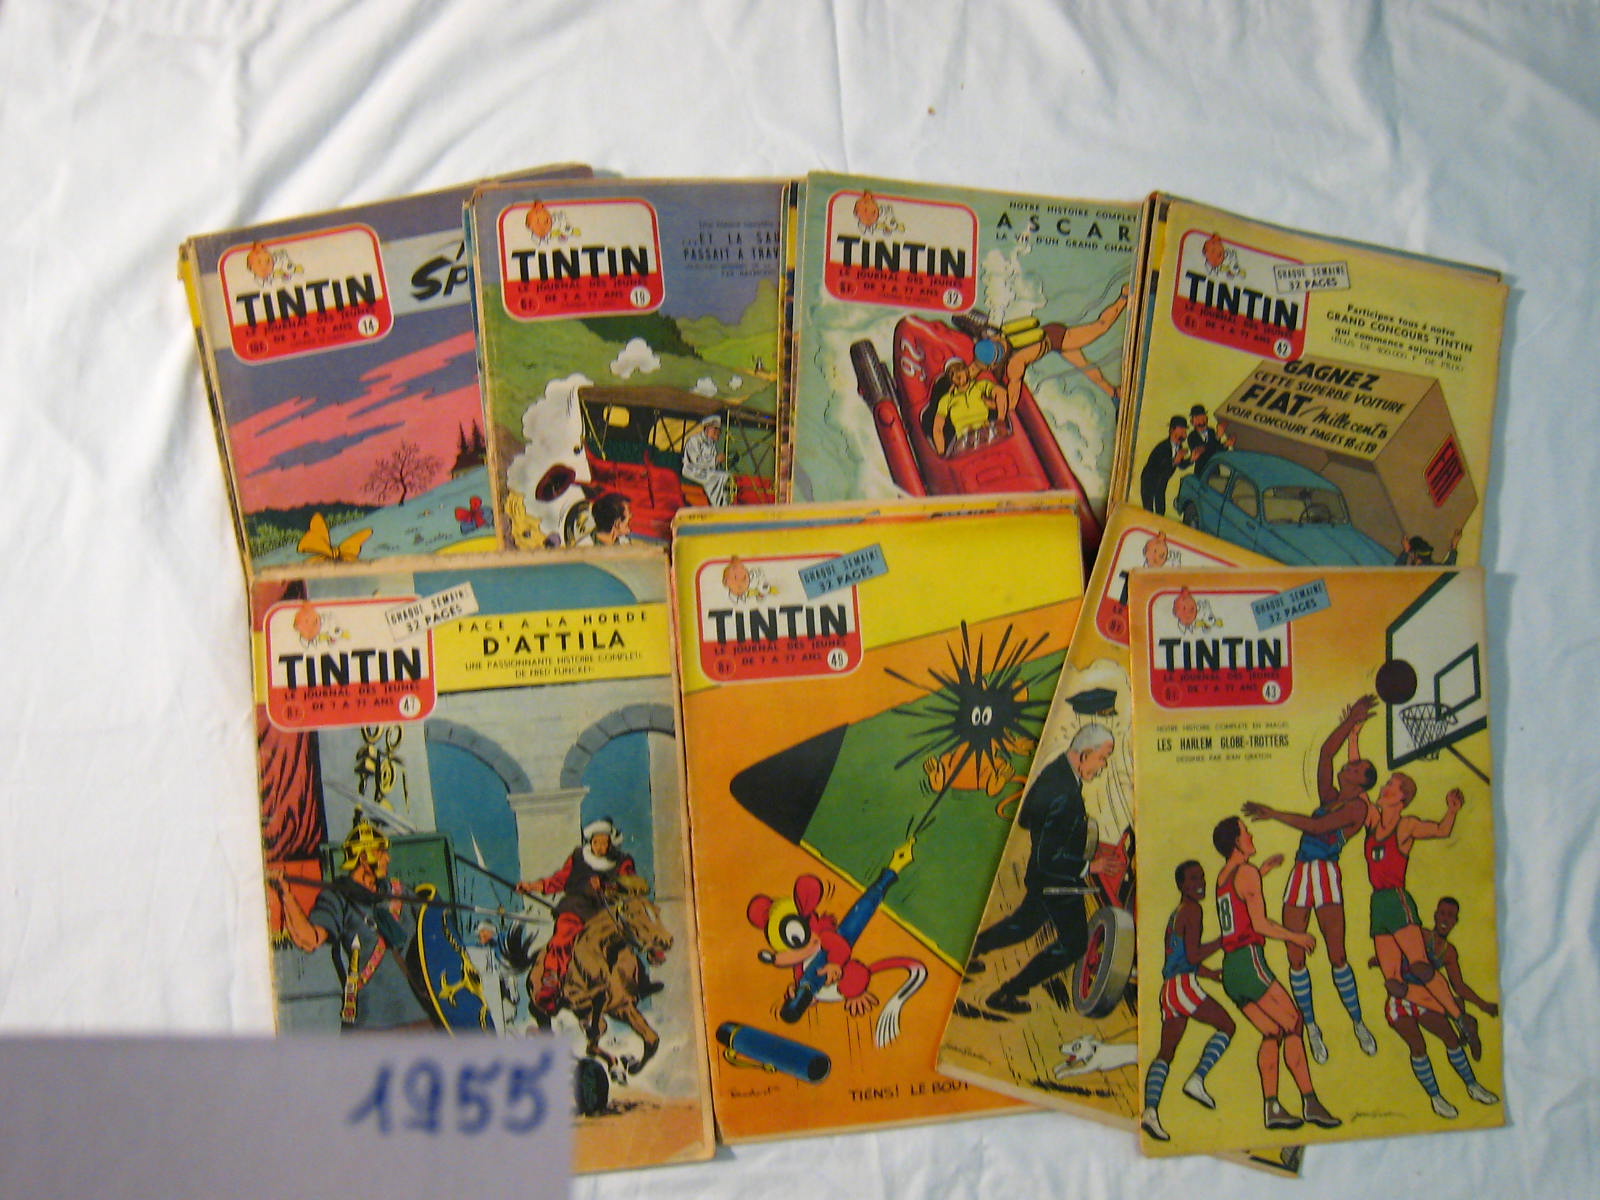 A quantity of TINTIN comics, issues 1-52 inclusive, 1955.